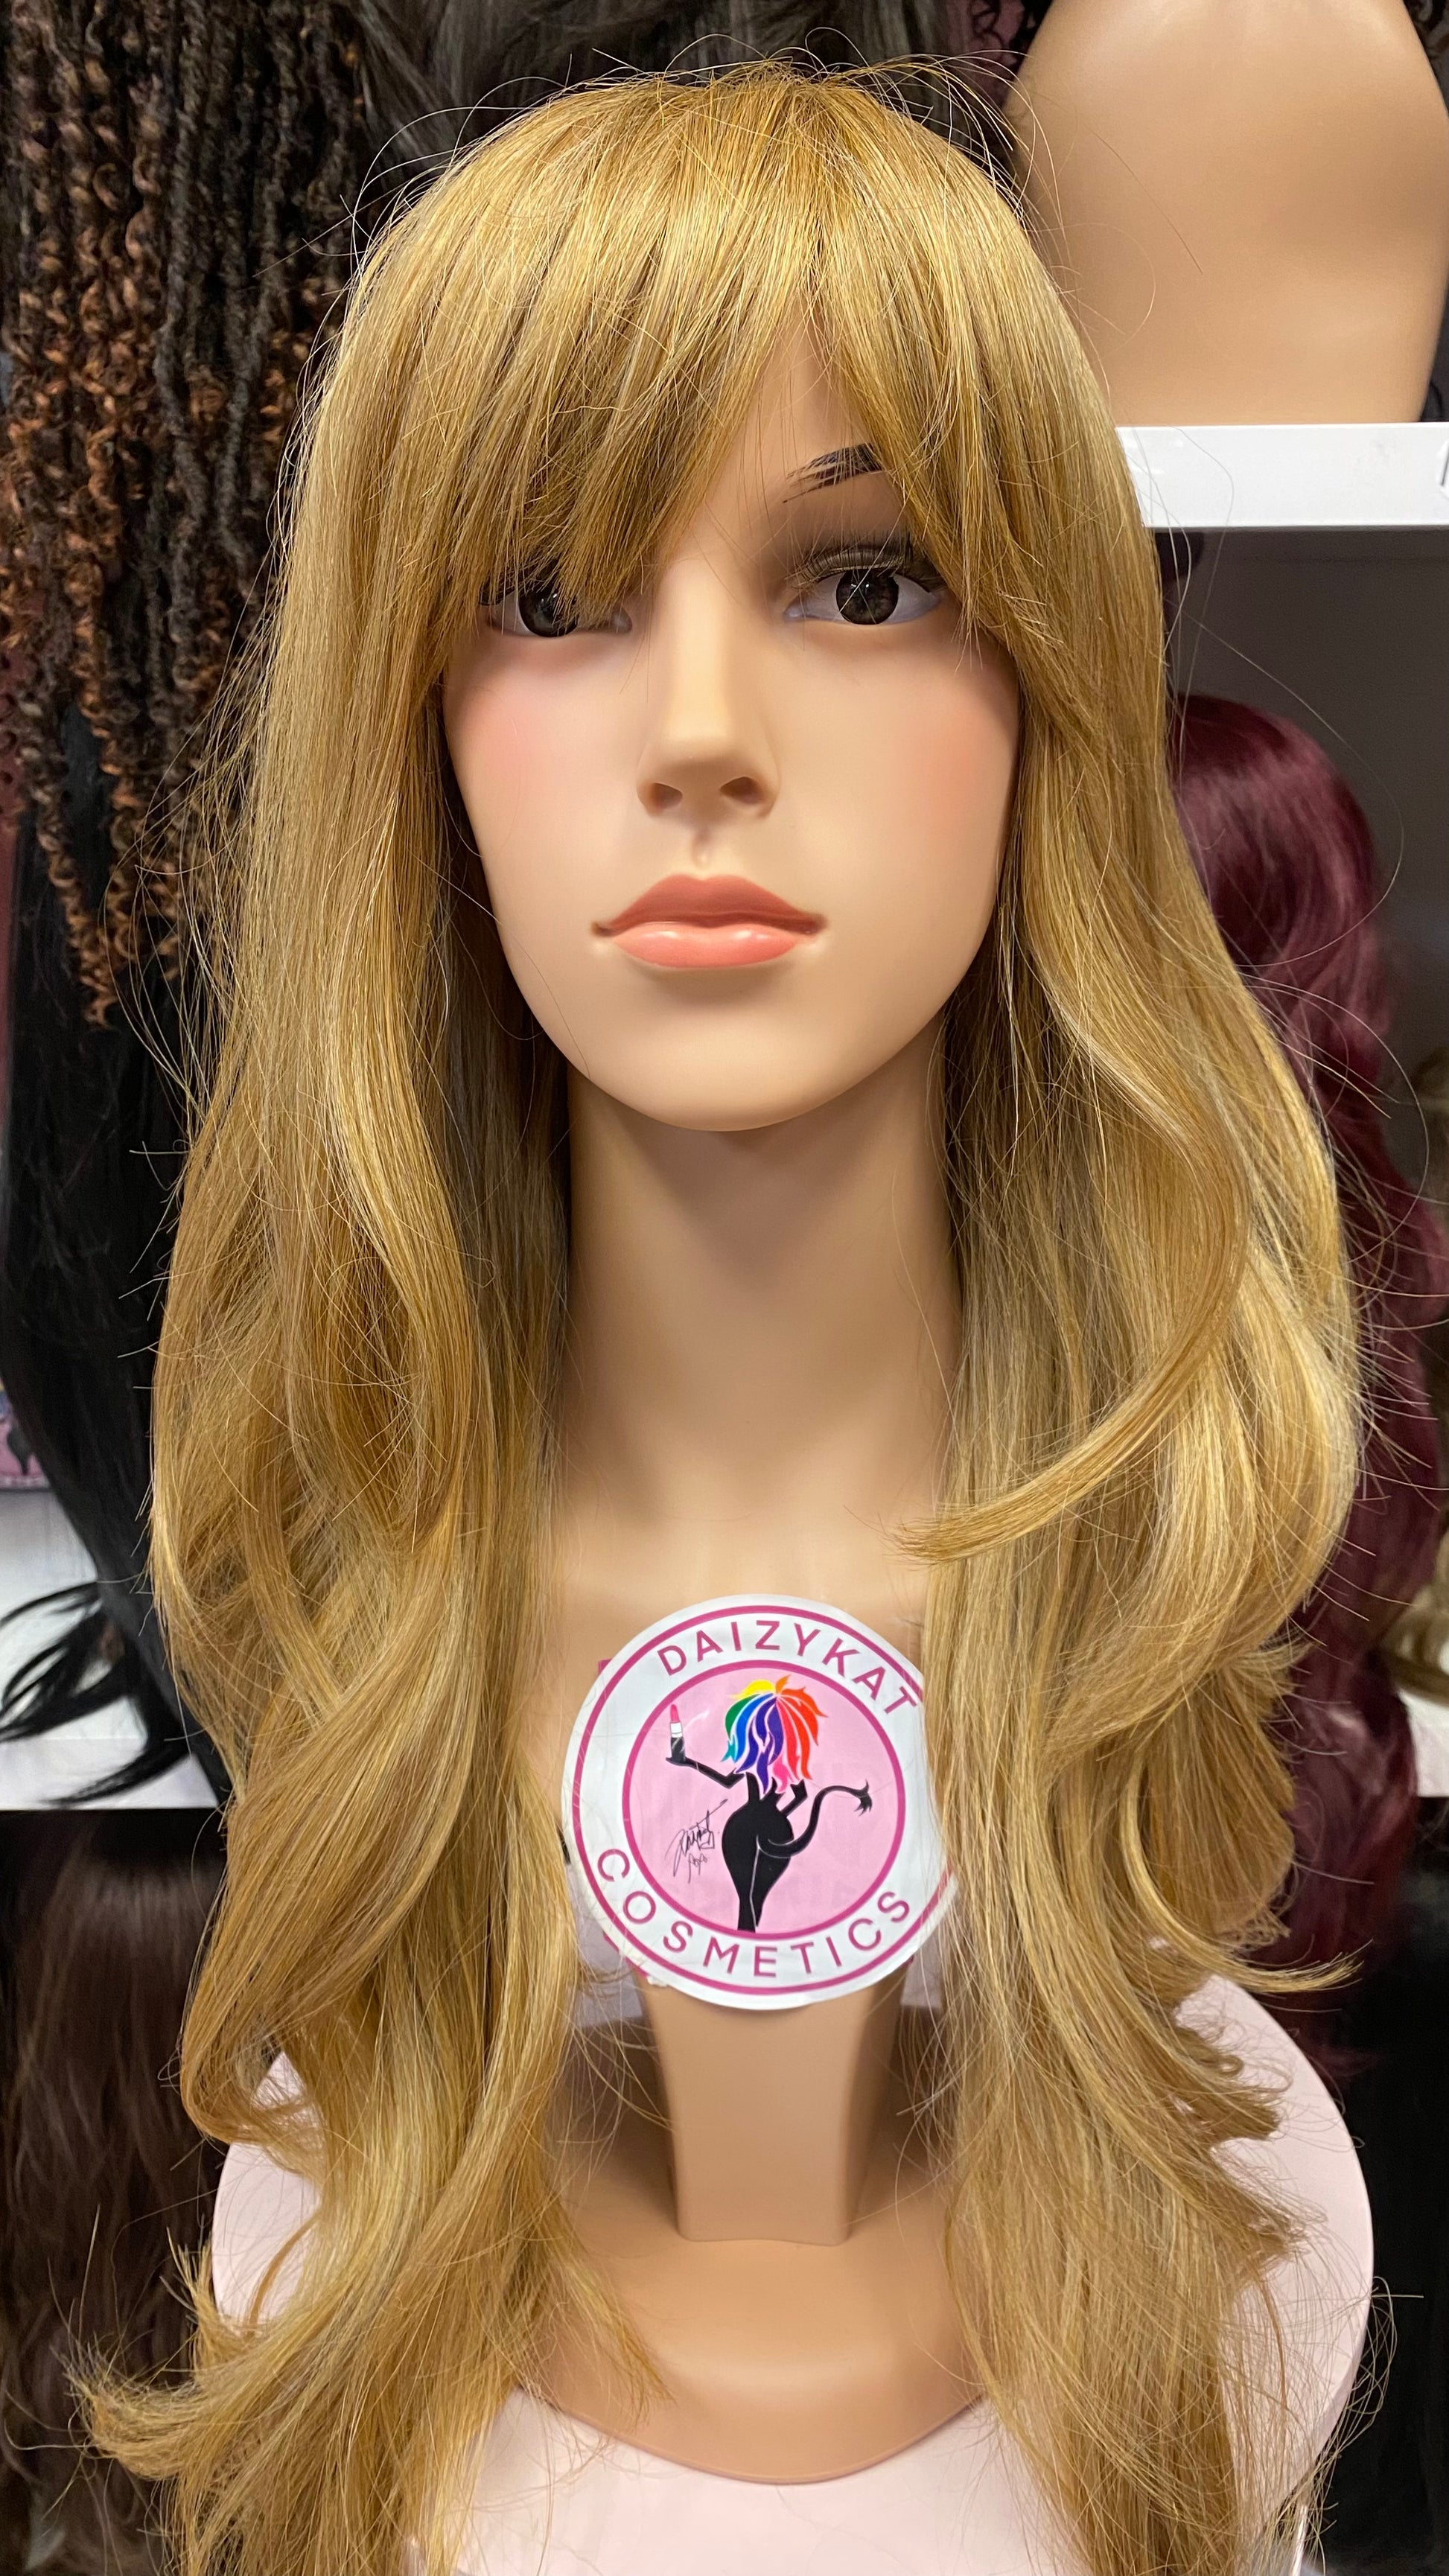 126 Selena - Classy Bangs Wig - BLONDE - DaizyKat Cosmetics 126 Selena - Classy Bangs Wig - BLONDE DaizyKat Cosmetics Wigs